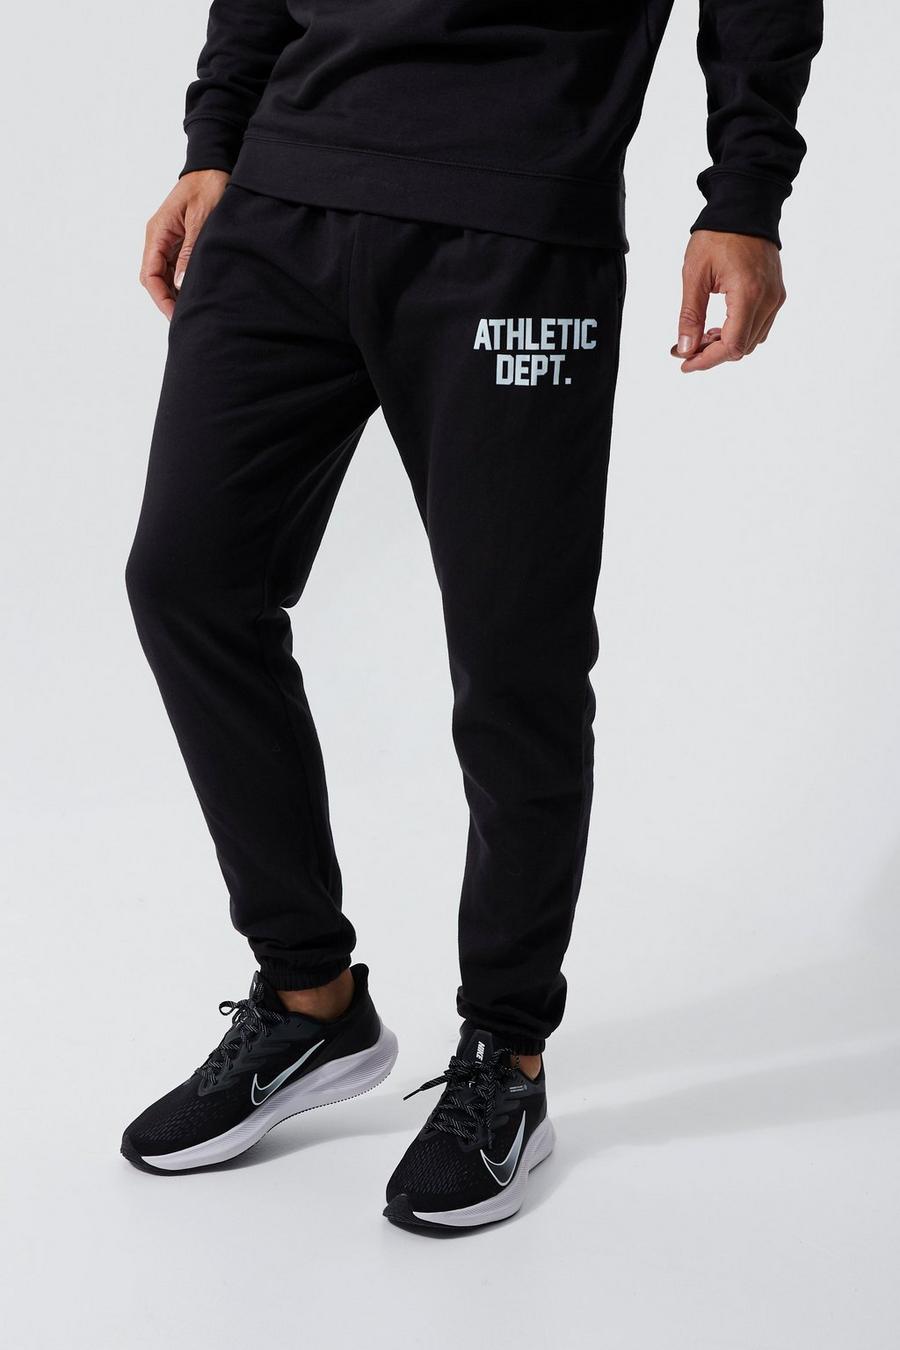 Pantaloni tuta Tall Man Active Athletic Dept., Black nero